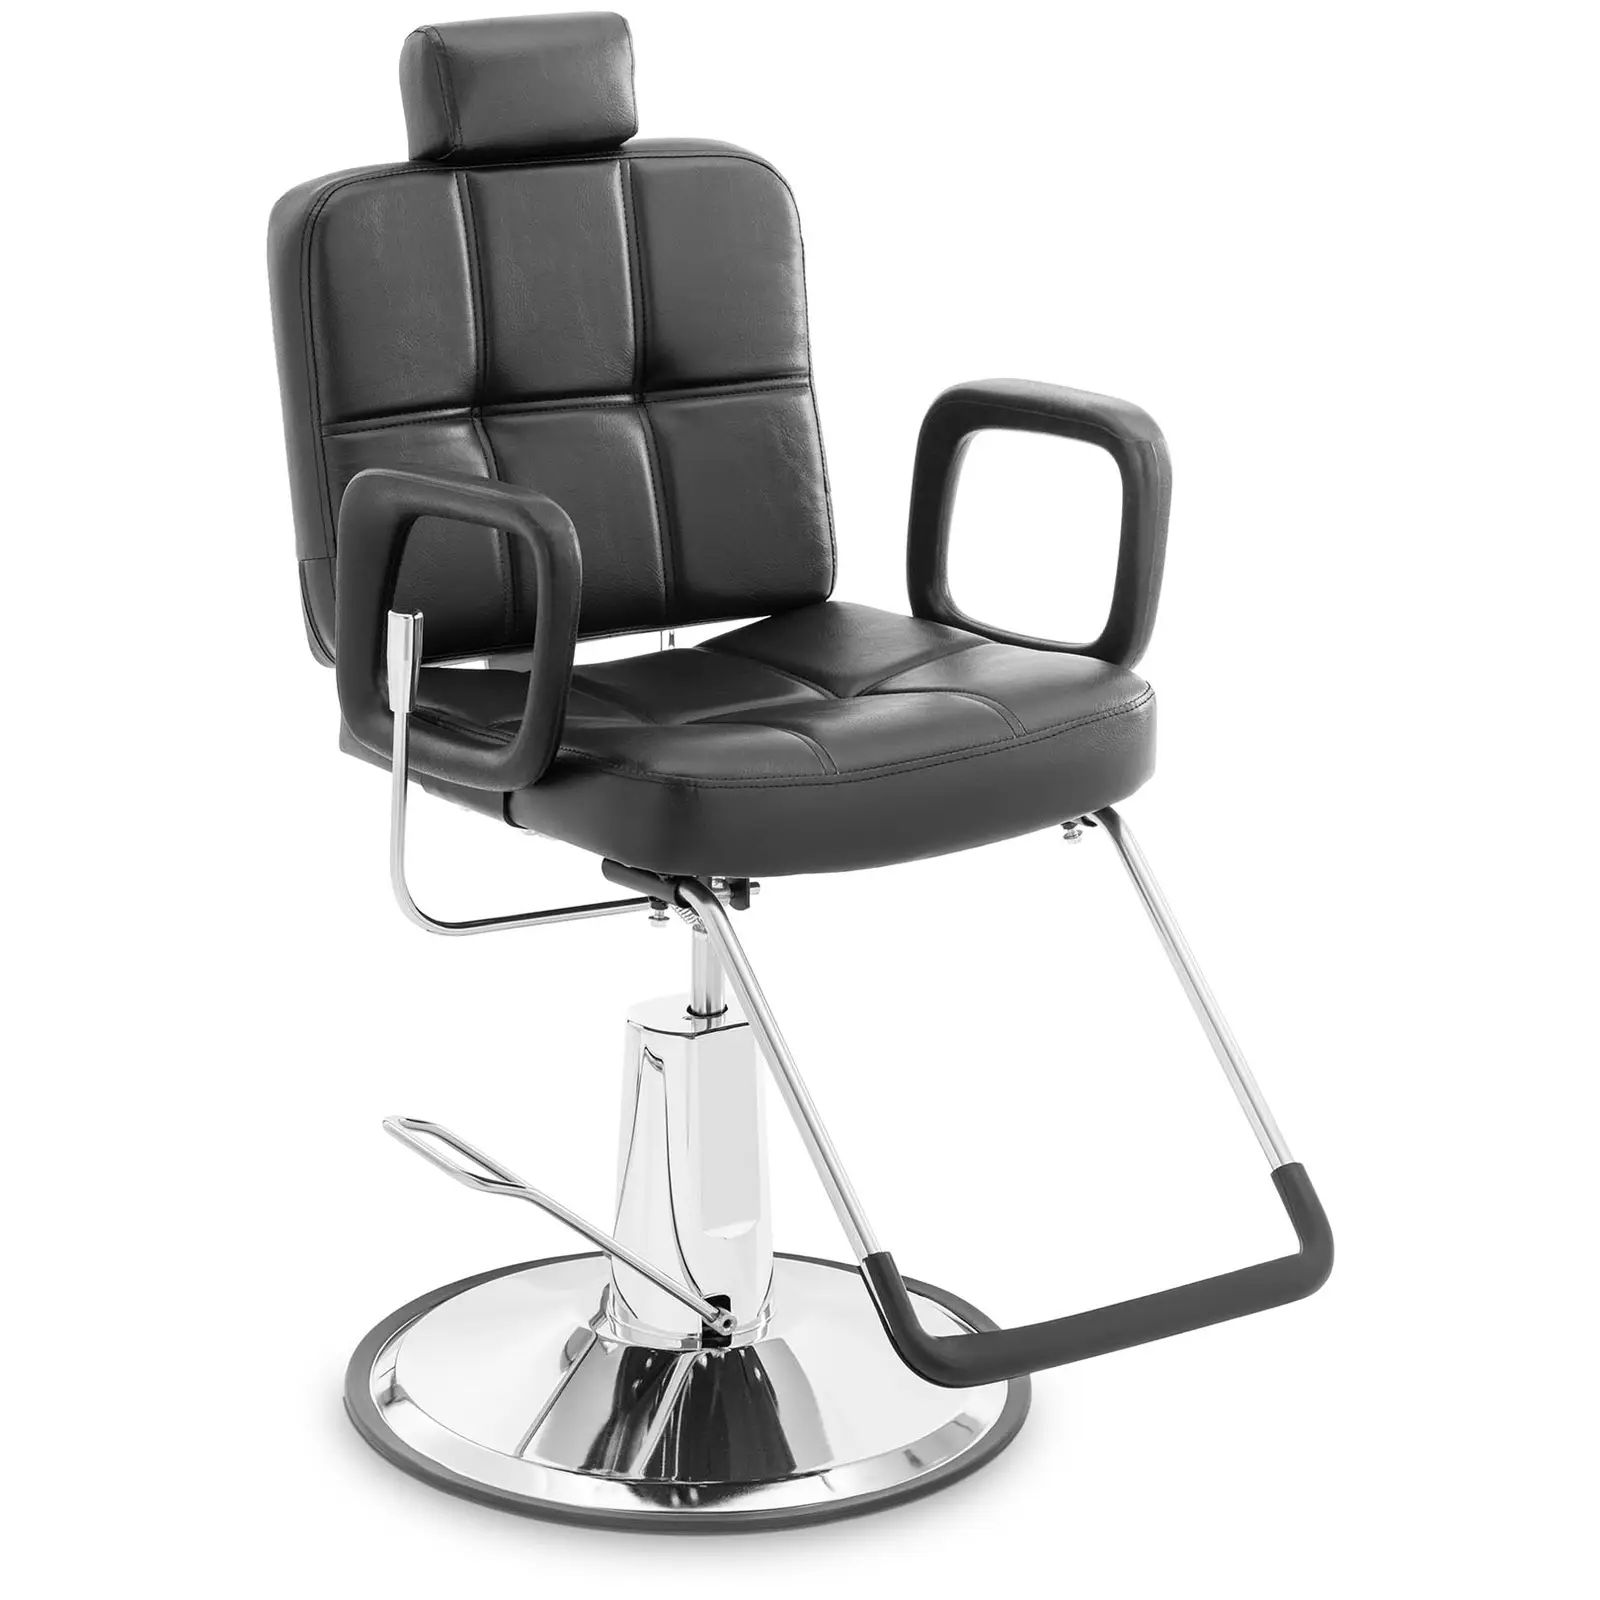 Salon chair - Head and footrest - 52 - 64 cm - 150 kg - black